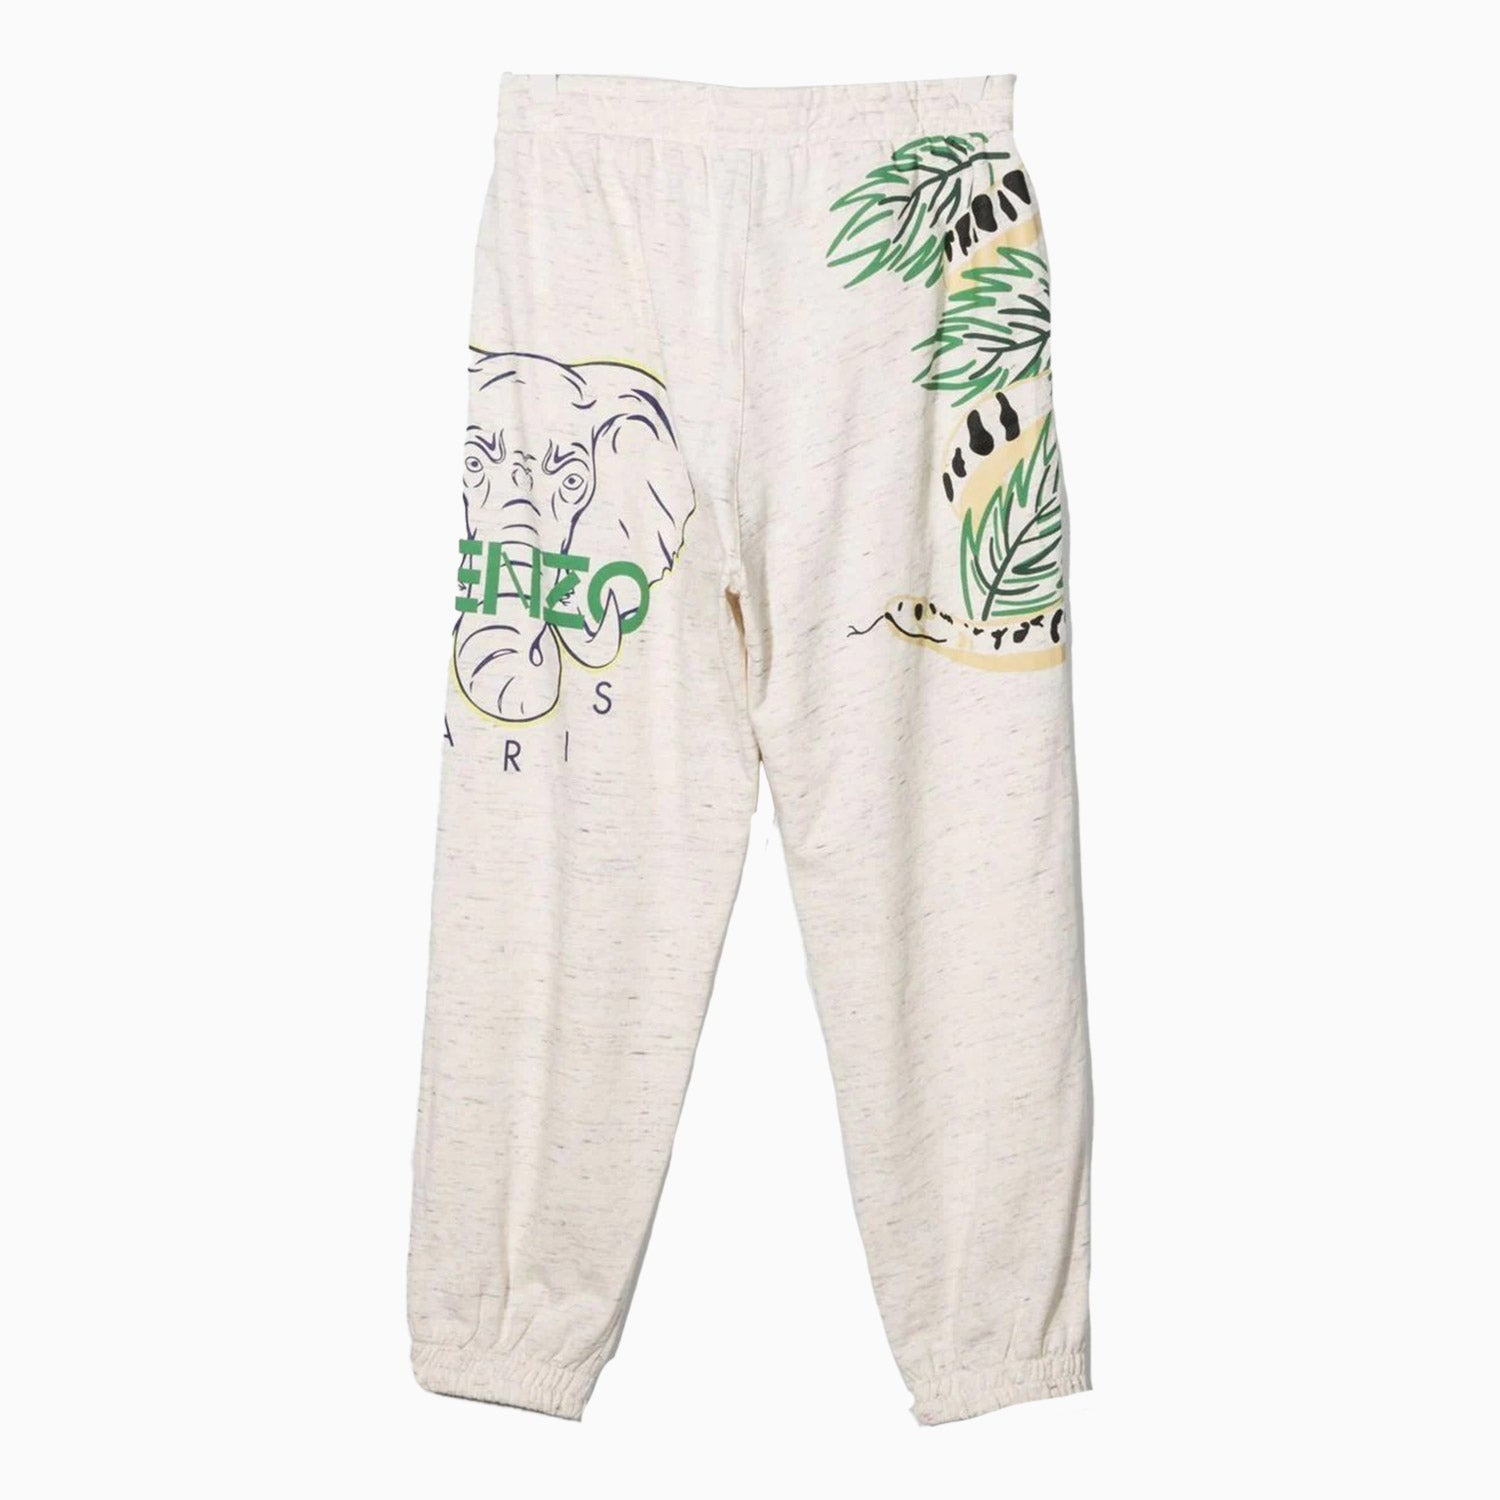 Kenzo Kid's Fleece Pant - Color: Off White - Kids Premium Clothing -